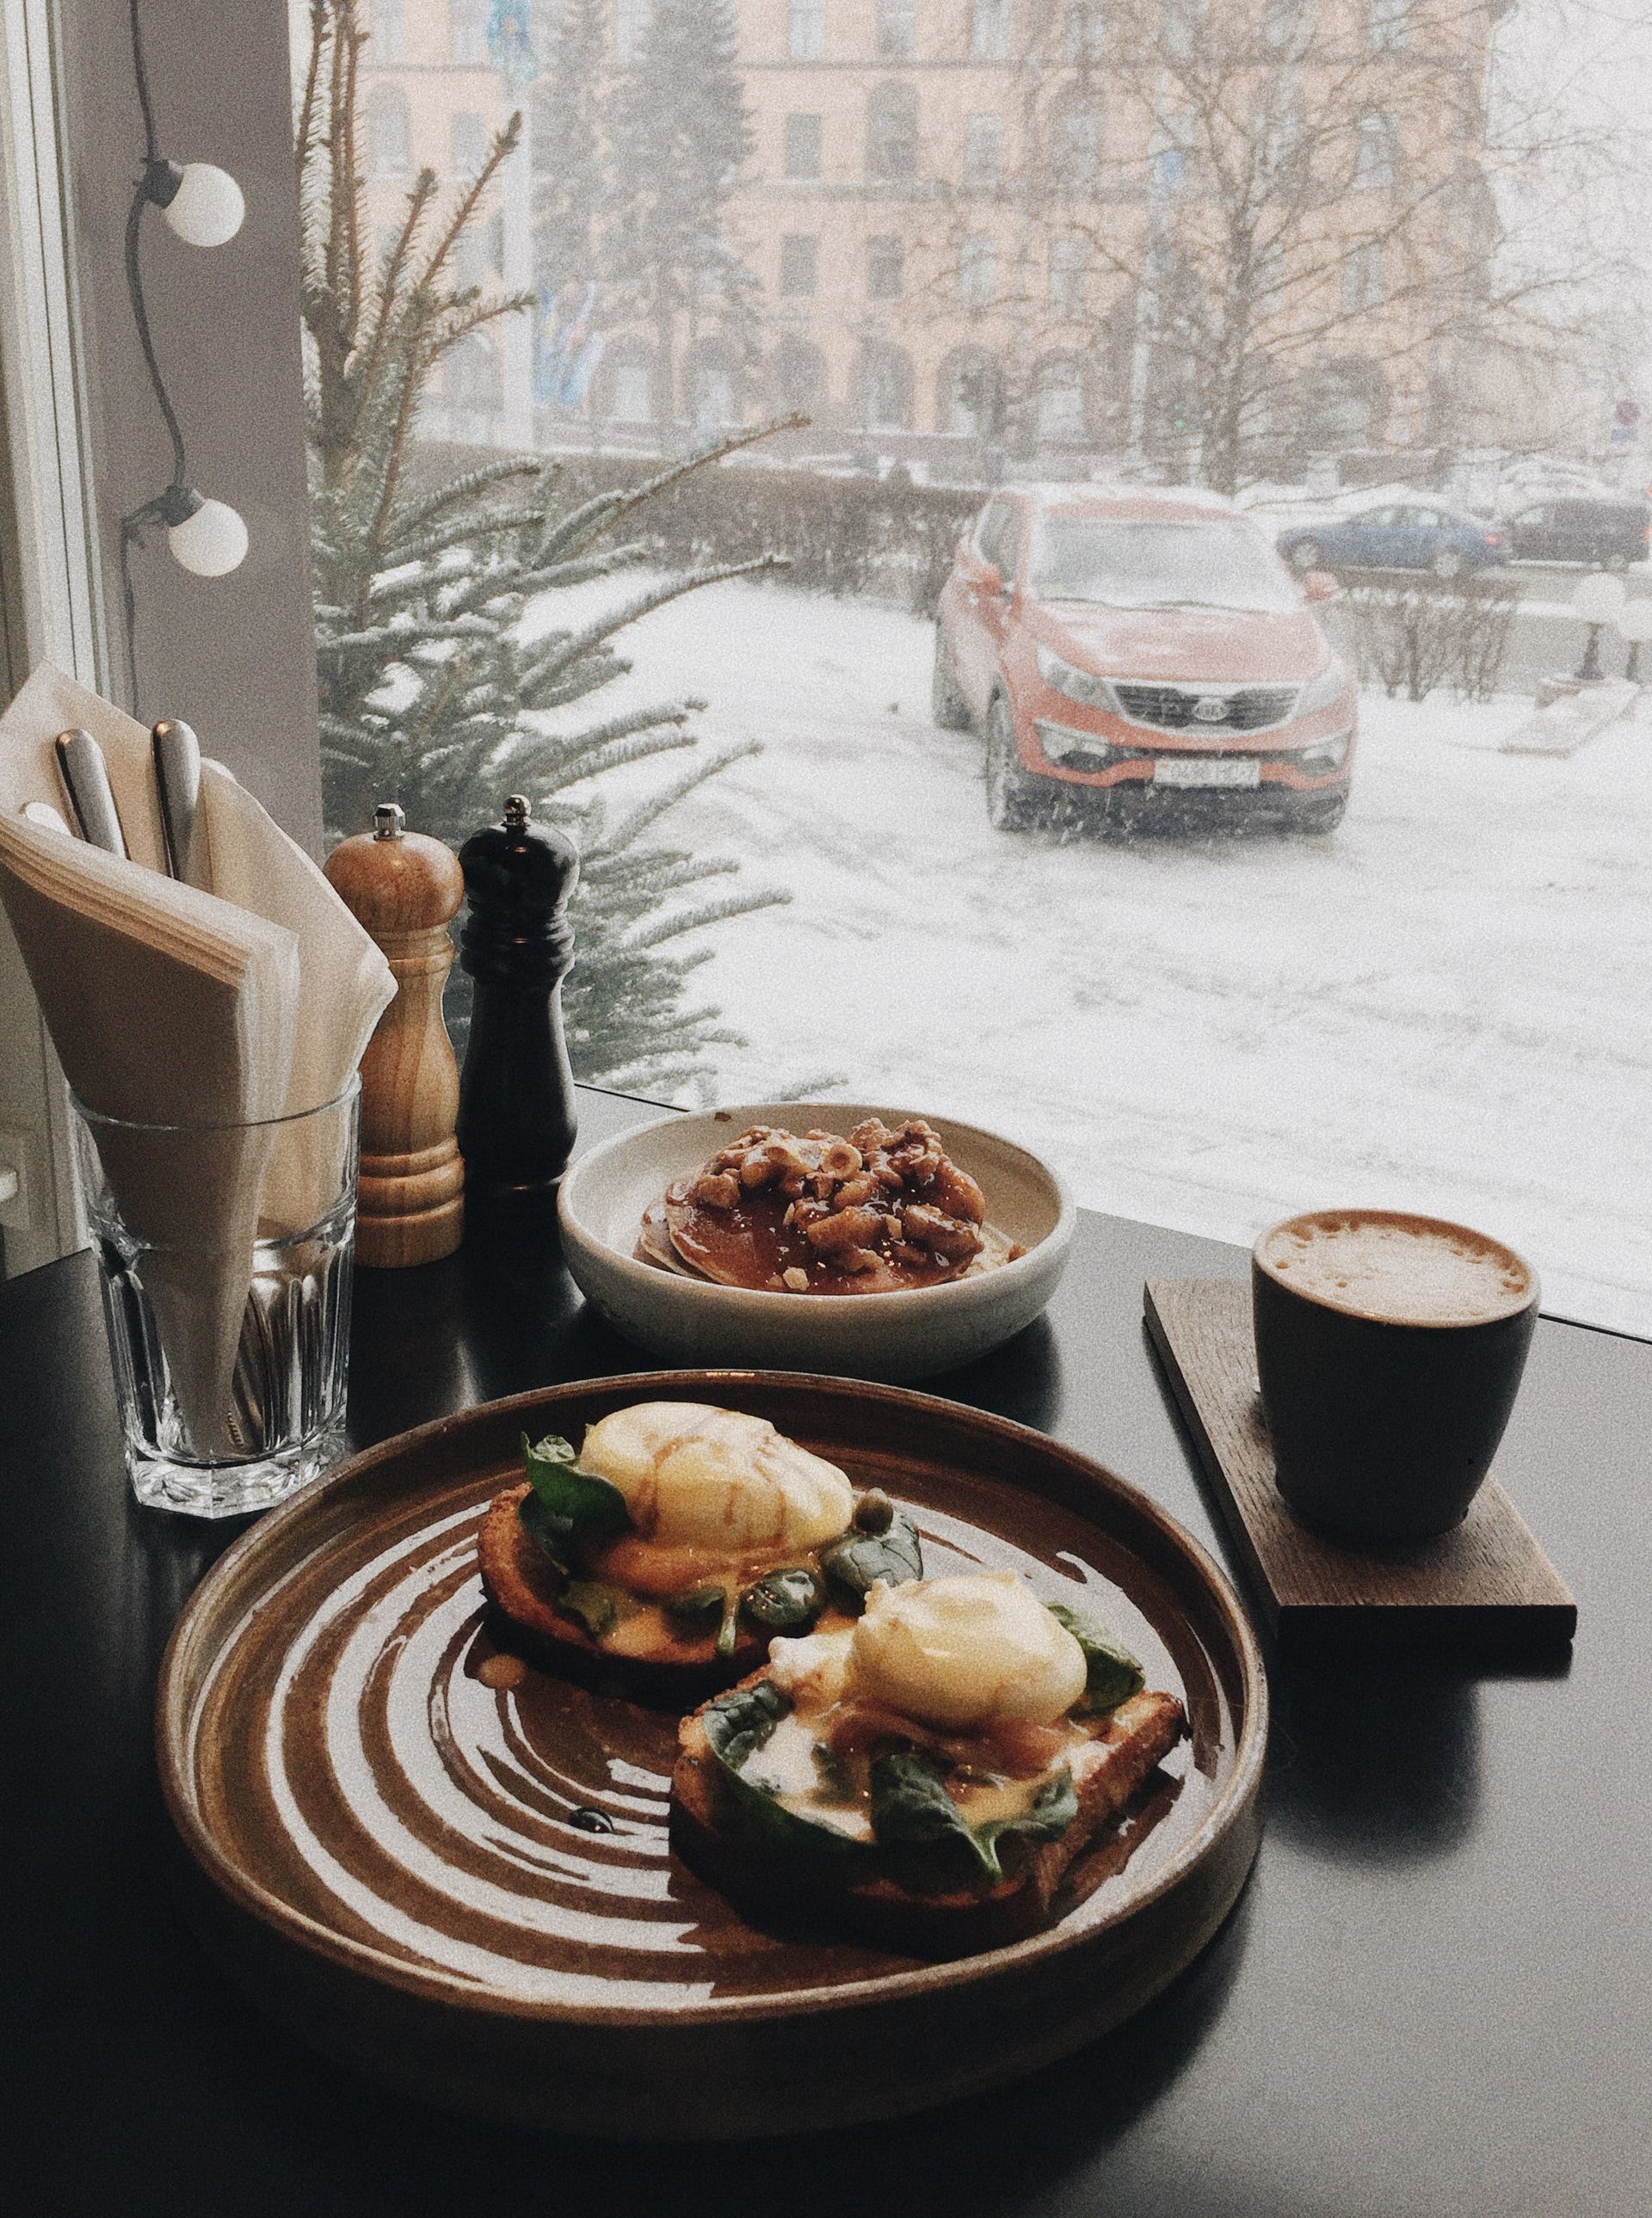 A wintery scene from a cafe window.